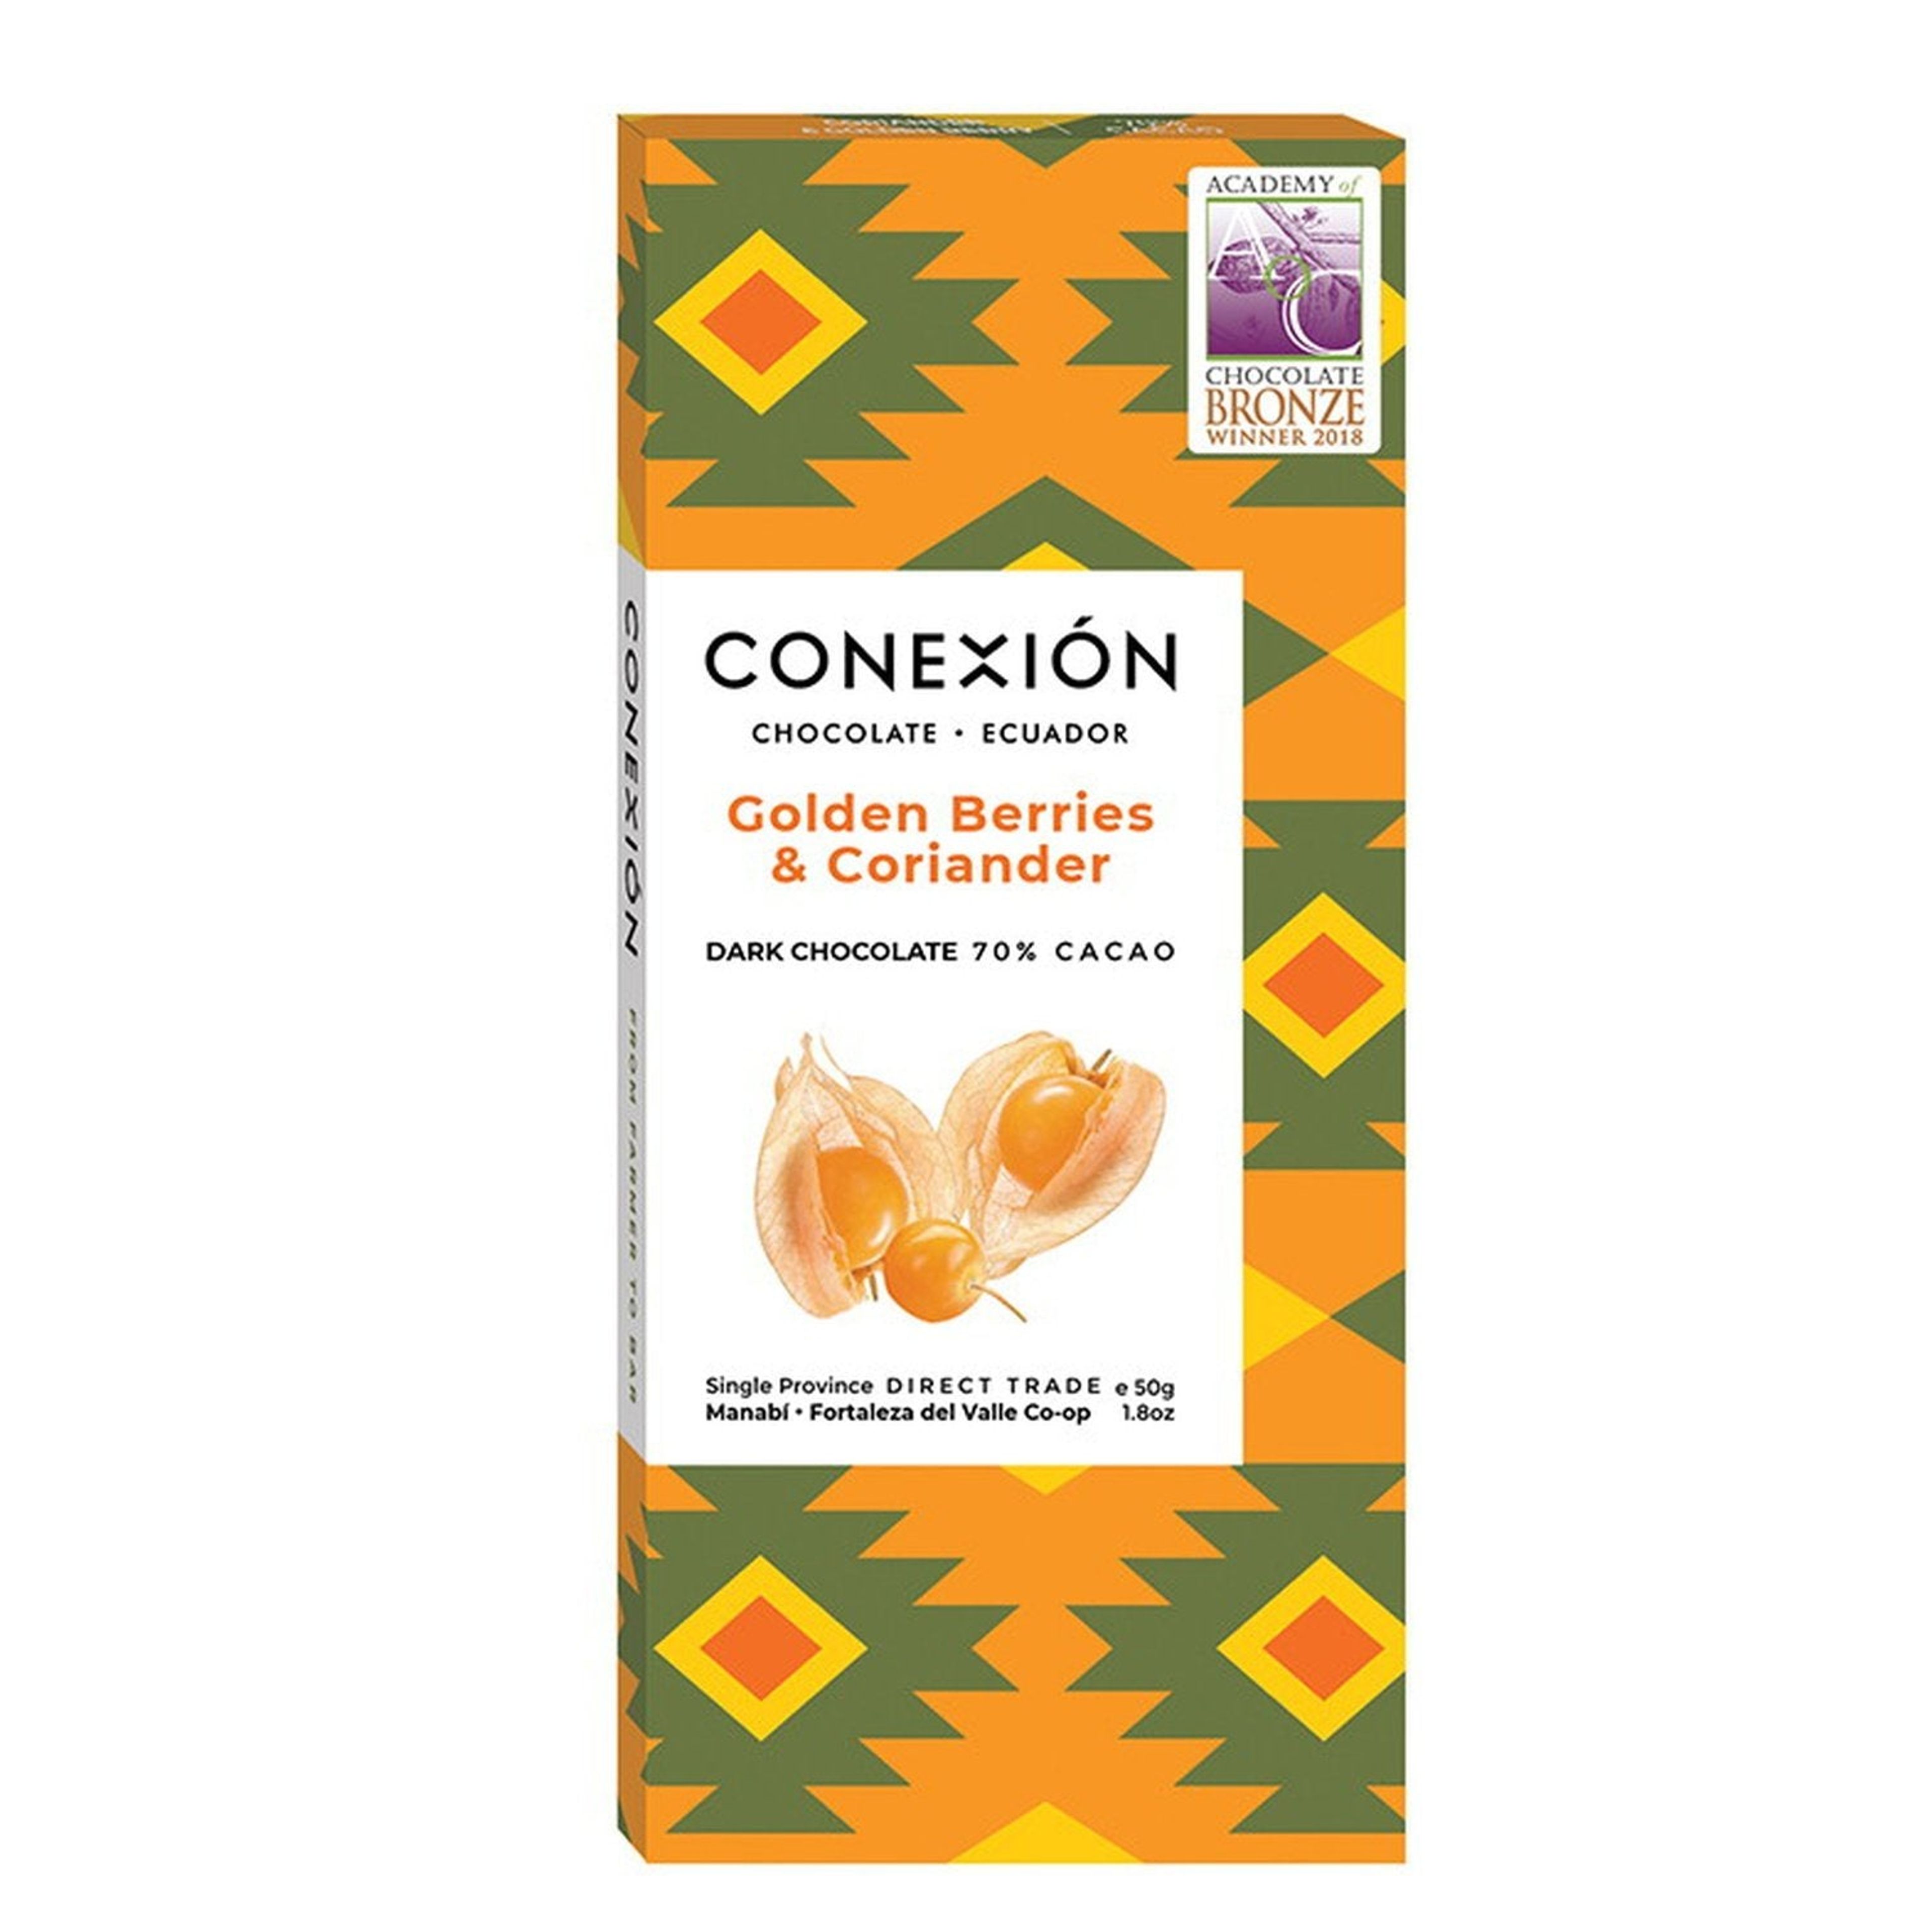 CONEXIÓN 70% Dark Fruity Chocolate Bars Flavored with Golden Berries & Coriander  | 1.76 Oz